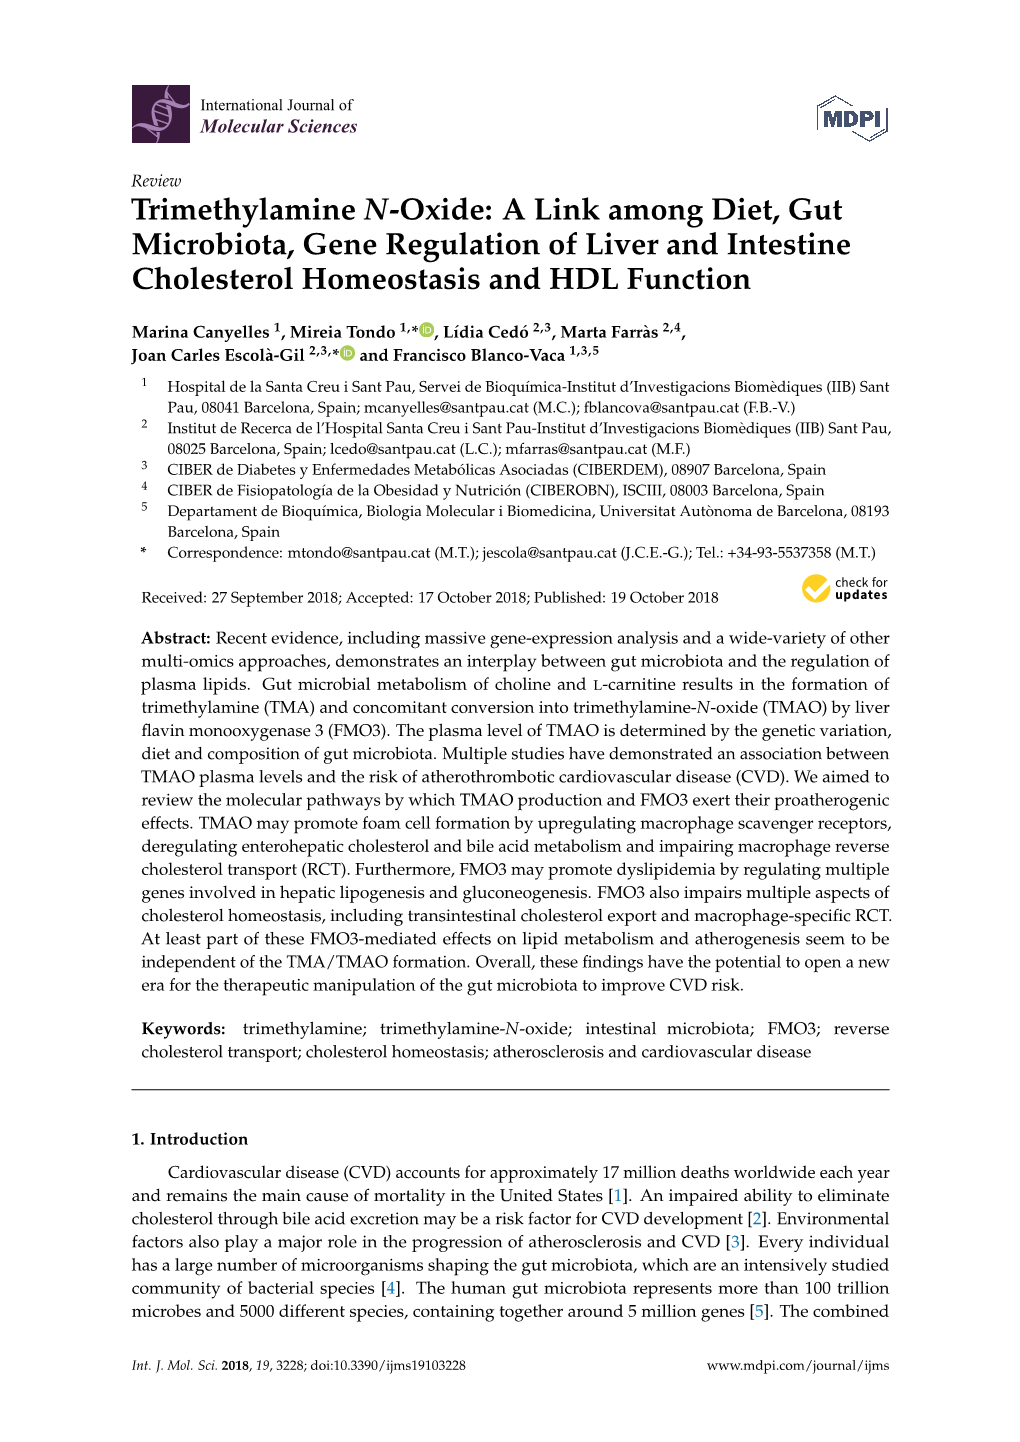 Trimethylamine N-Oxide: a Link Among Diet, Gut Microbiota, Gene Regulation of Liver and Intestine Cholesterol Homeostasis and HDL Function